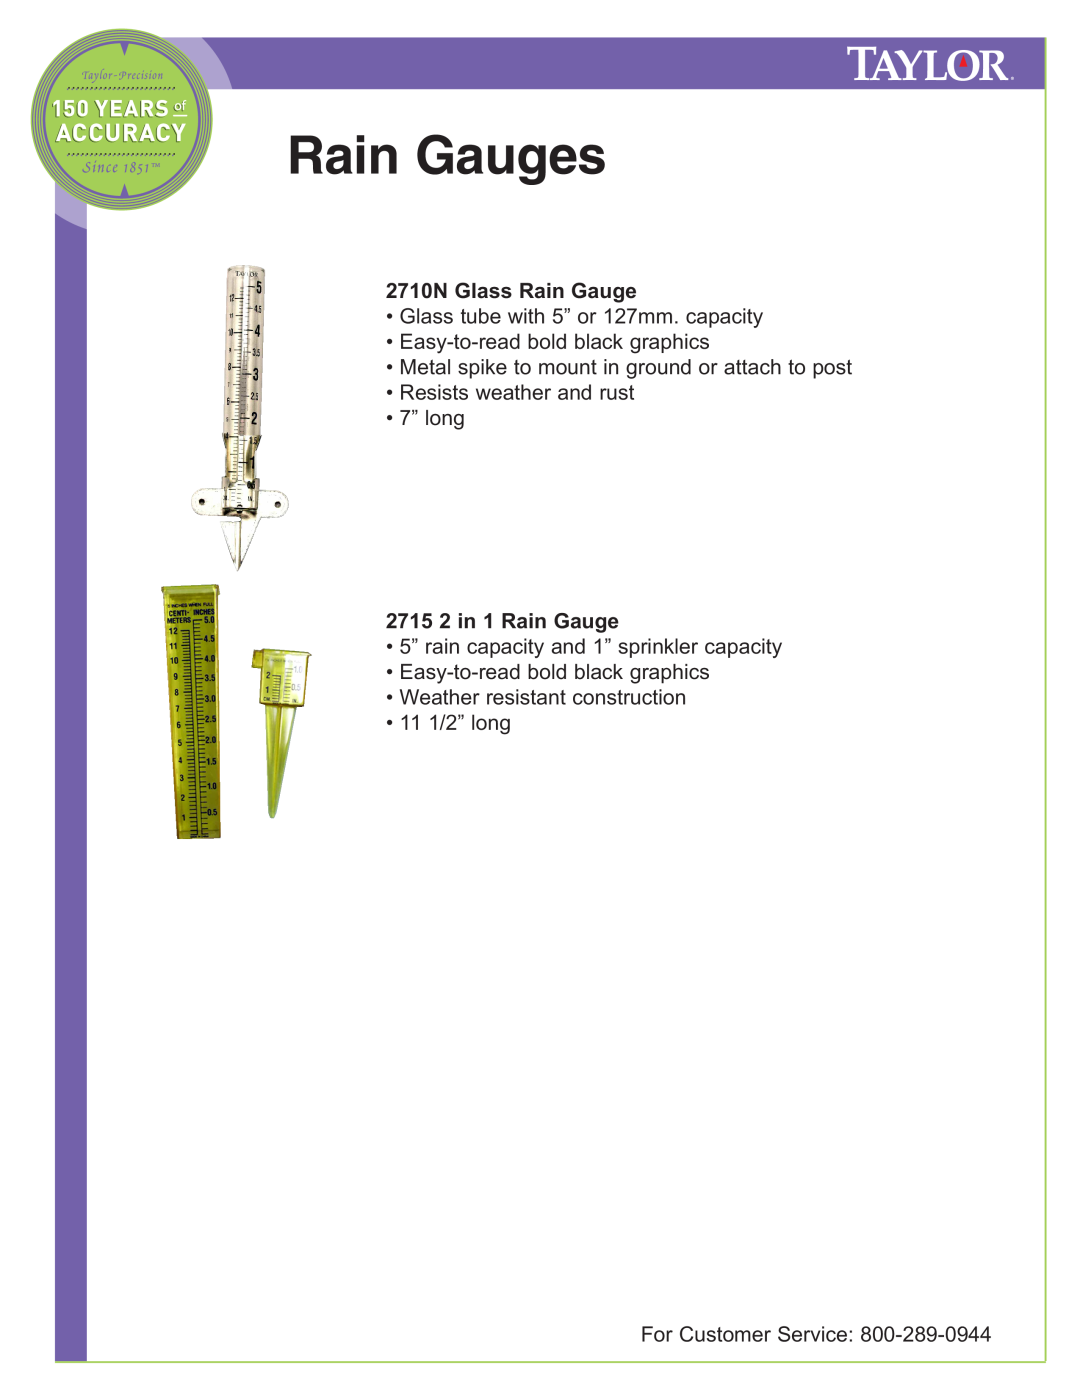 Taylor 2704, 2700N manual 2710N Glass Rain Gauge, 2715 2 in 1 Rain Gauge, Rain Gauges, Glass tube with 5” or 127mm. capacity 